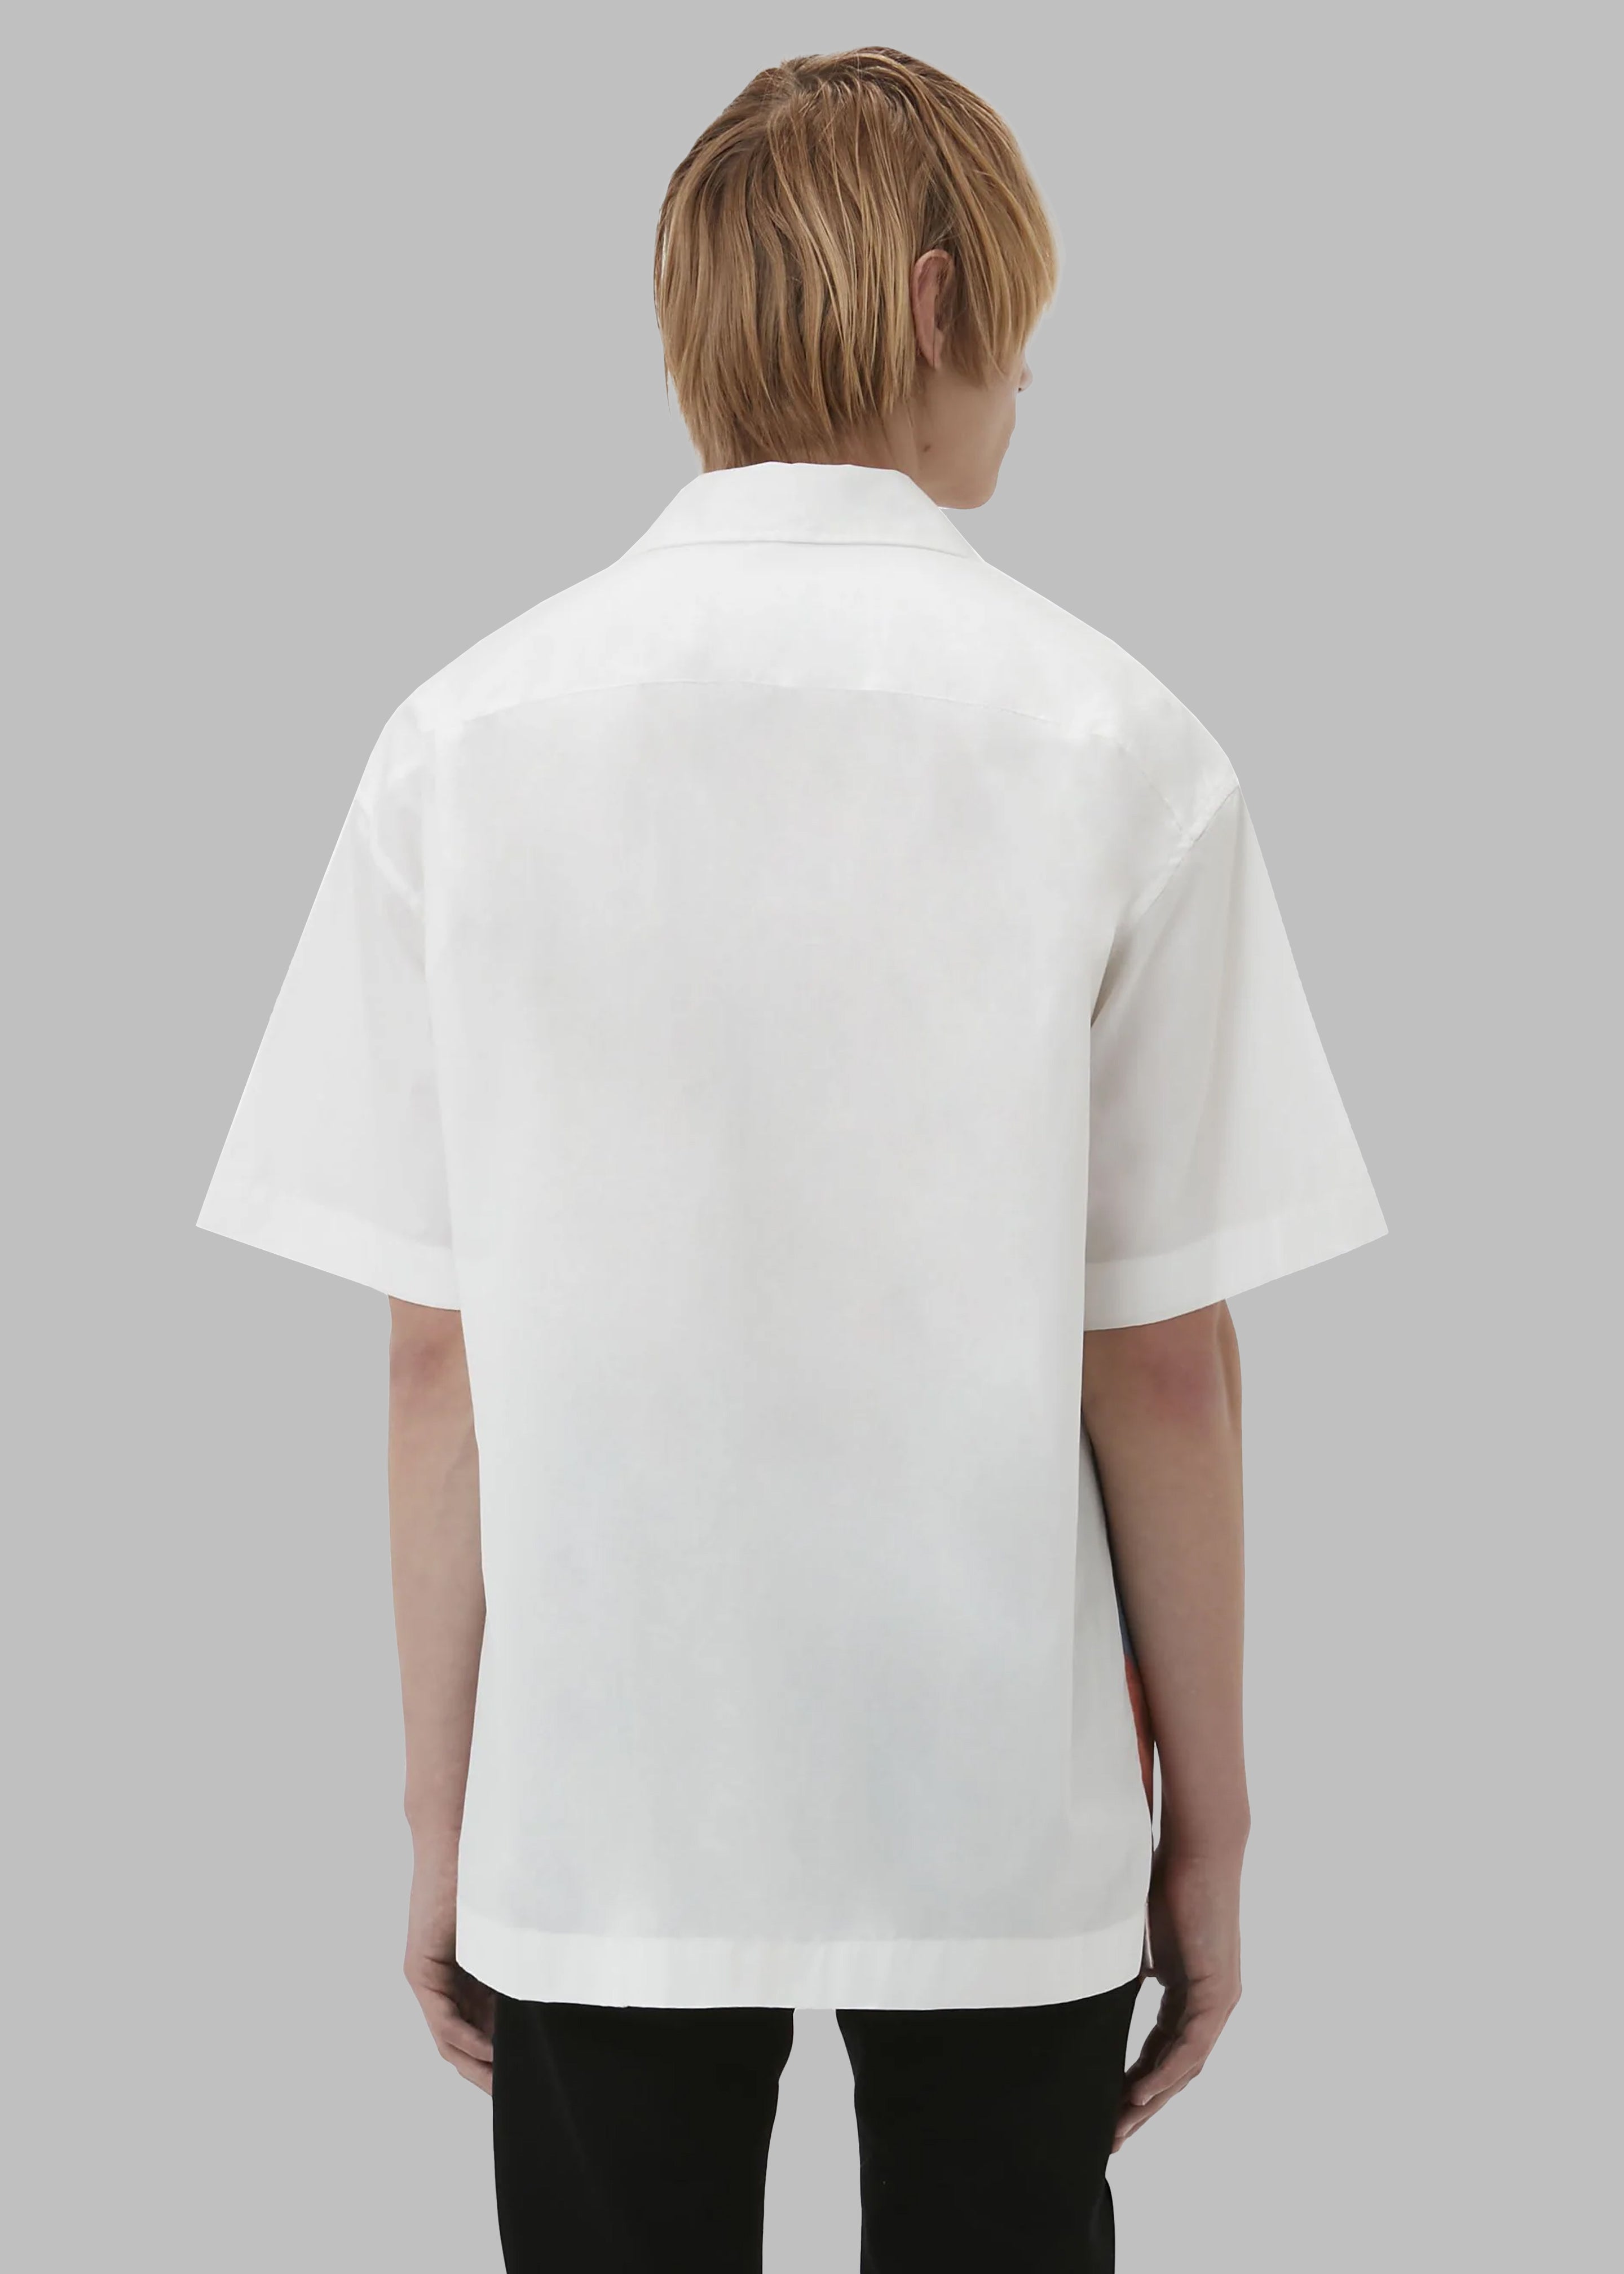 JW Anderson Profile Stud Printed Short Sleeve Shirt - White/Multi